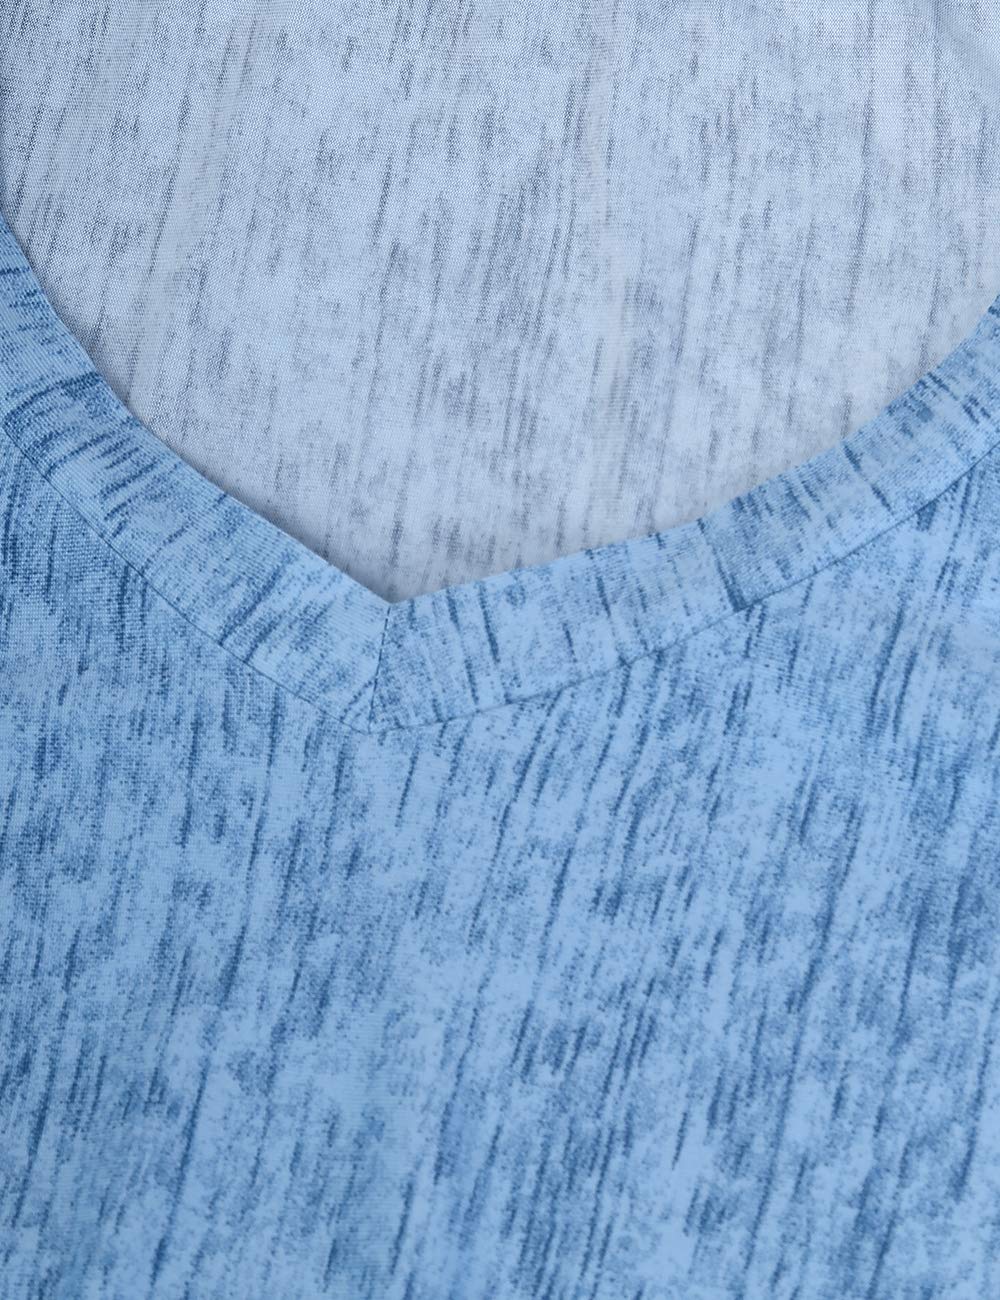 BAISHENGGT Blue Paisley Women's Long Sleeve Tunic Tops for Leggings V-Neck Casual Blouse T-Shirt